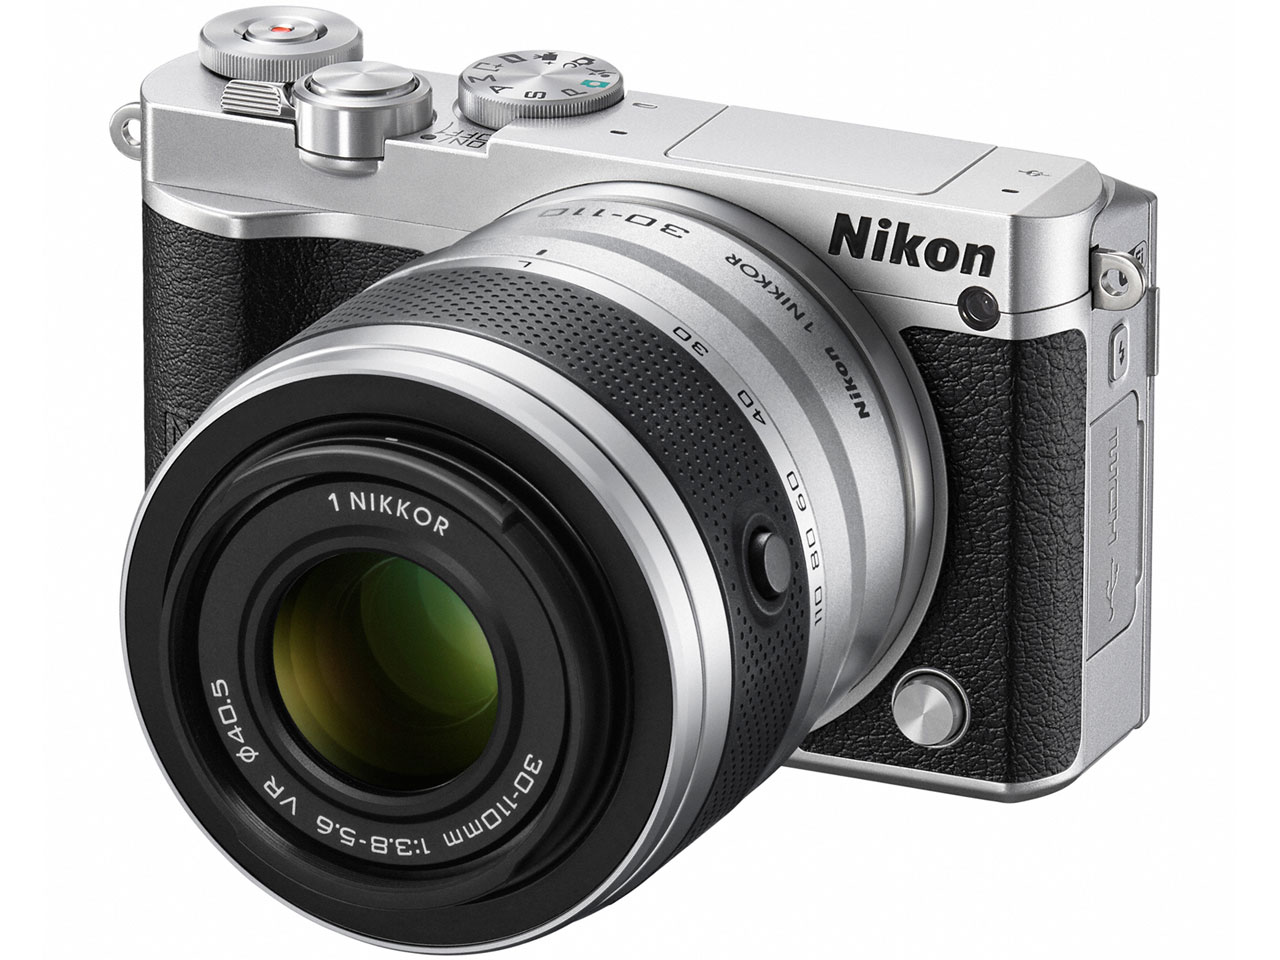 Nikon1 J5 ダブルズームキットミラーレス一眼 - ミラーレス一眼